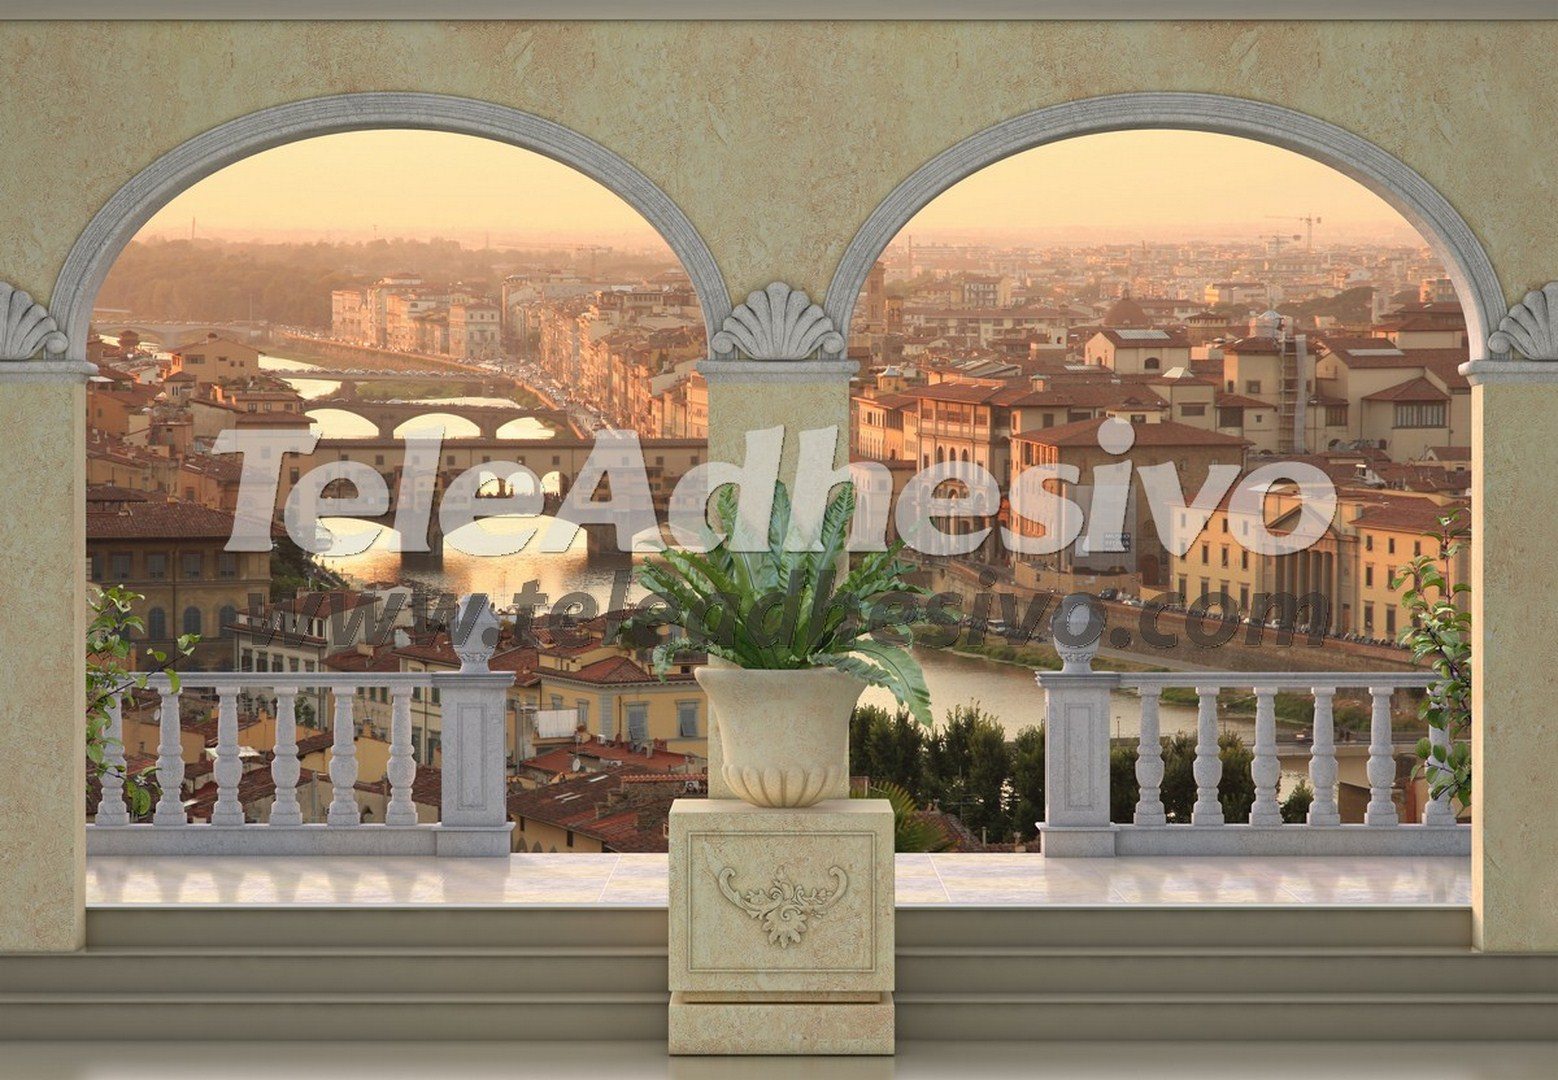 Fototapeten: Balkon in Florenz